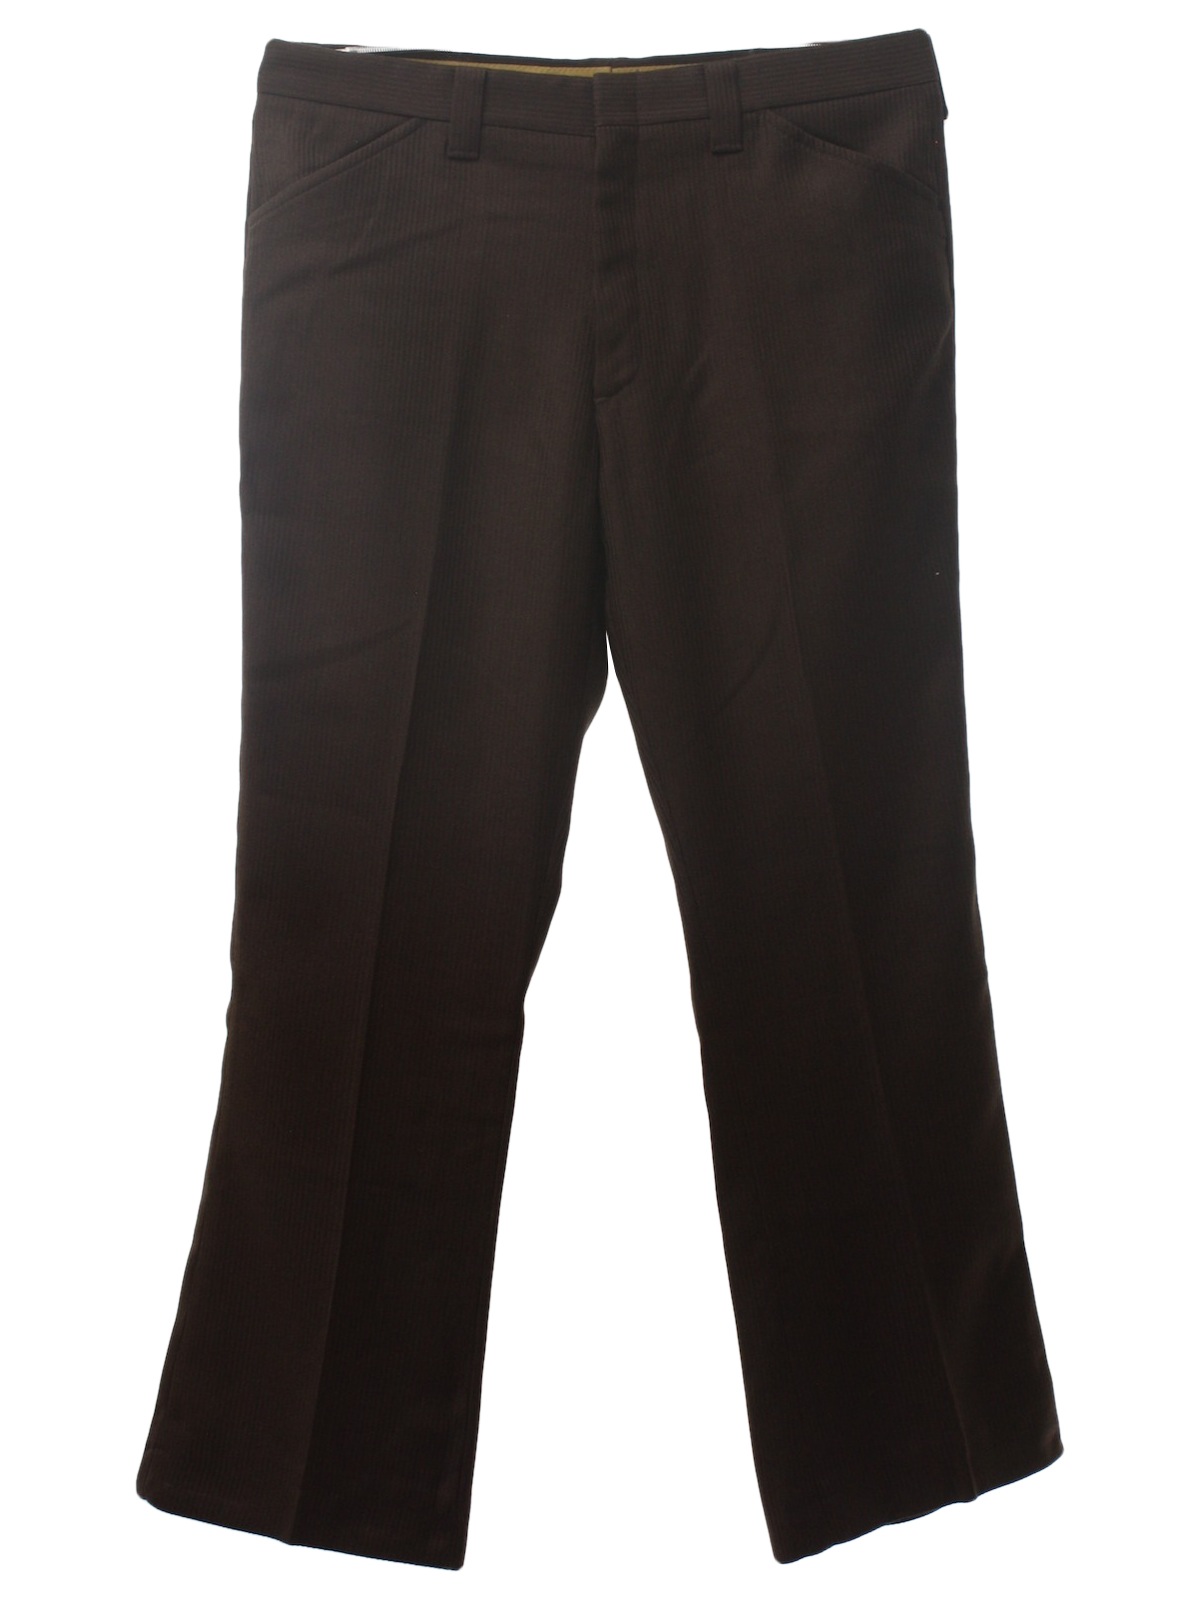 Farah 70's Vintage Flared Pants / Flares: 70s -Farah- Mens brown solid ...